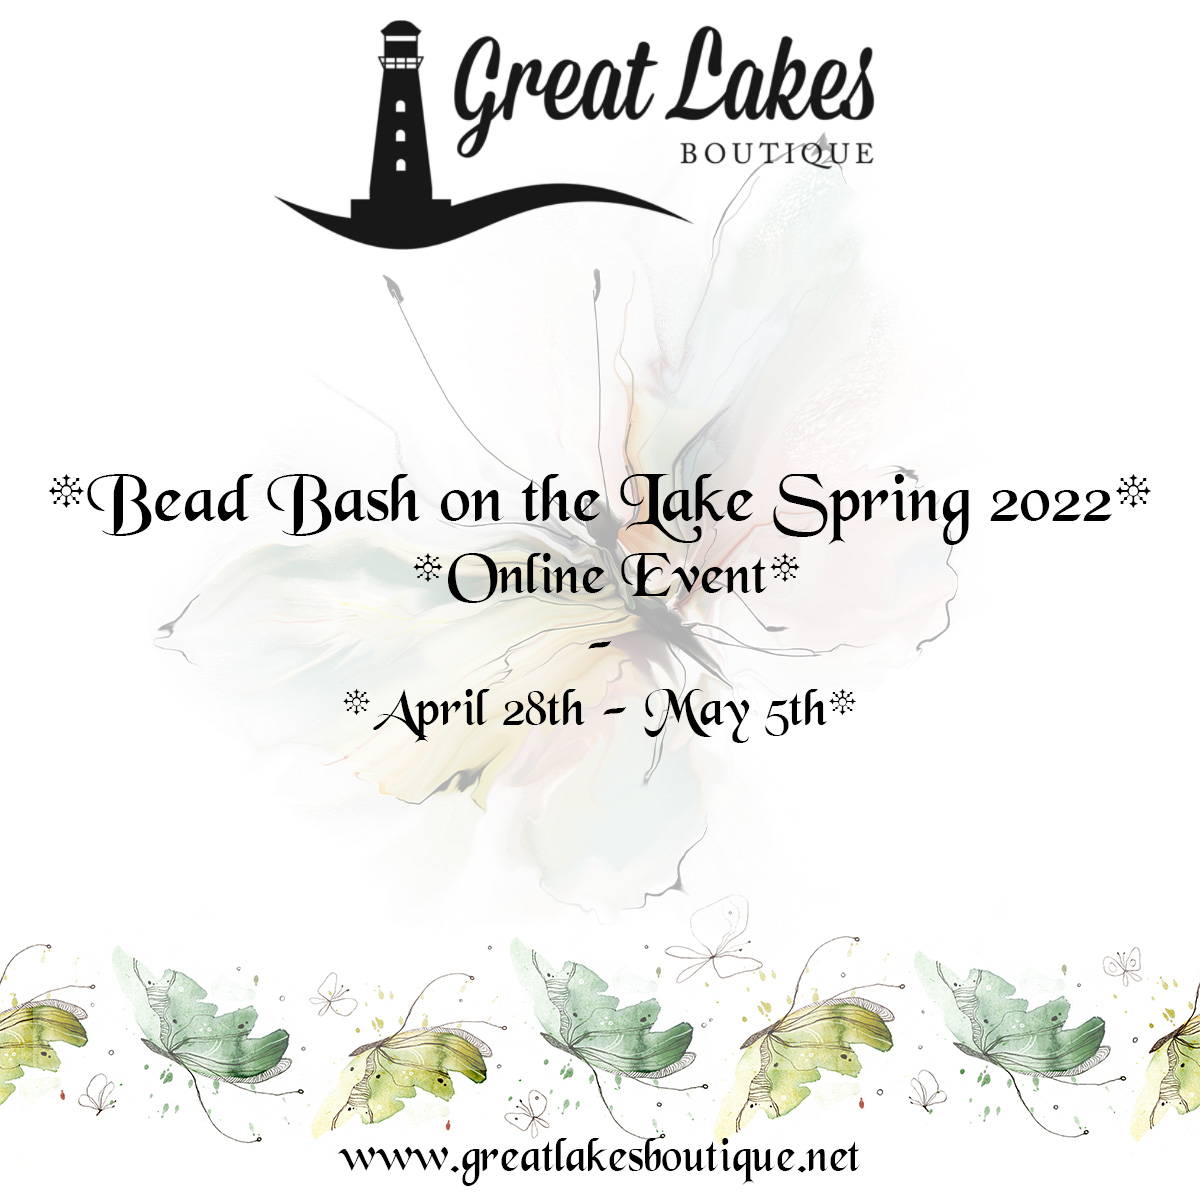 Bead Bash on the Lake Spring 2022